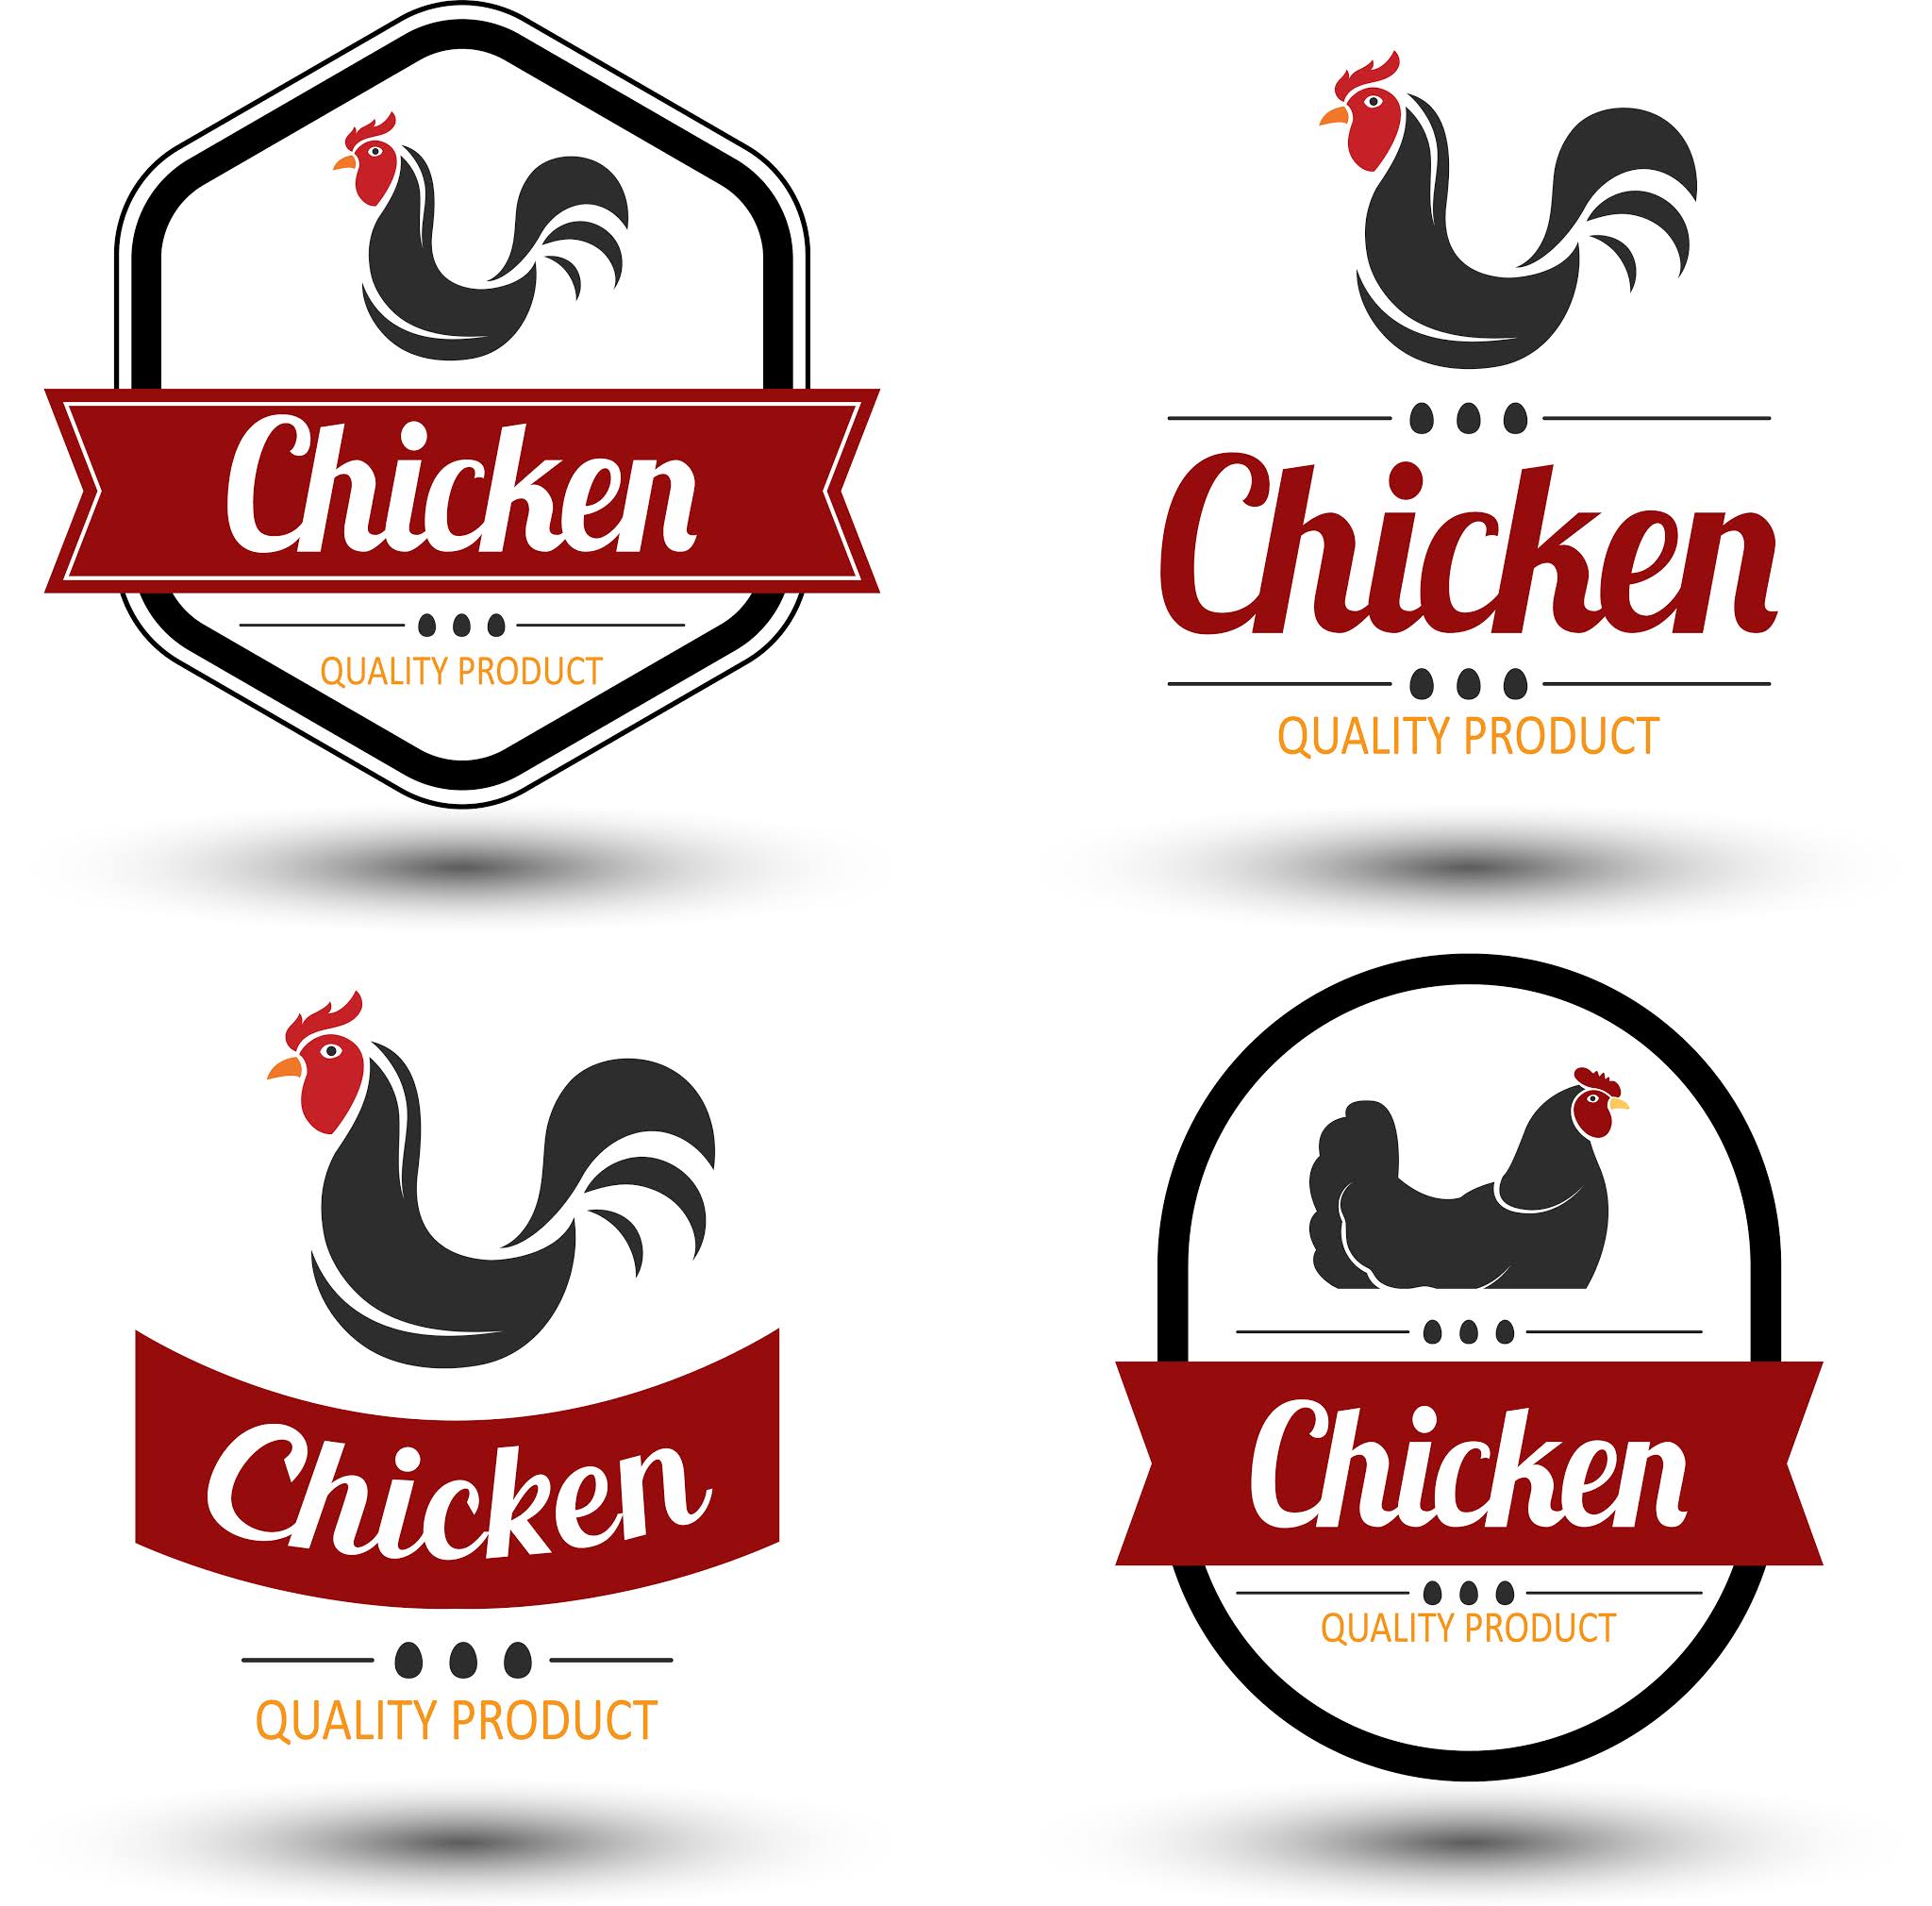 A set of high quality chicken logo designs